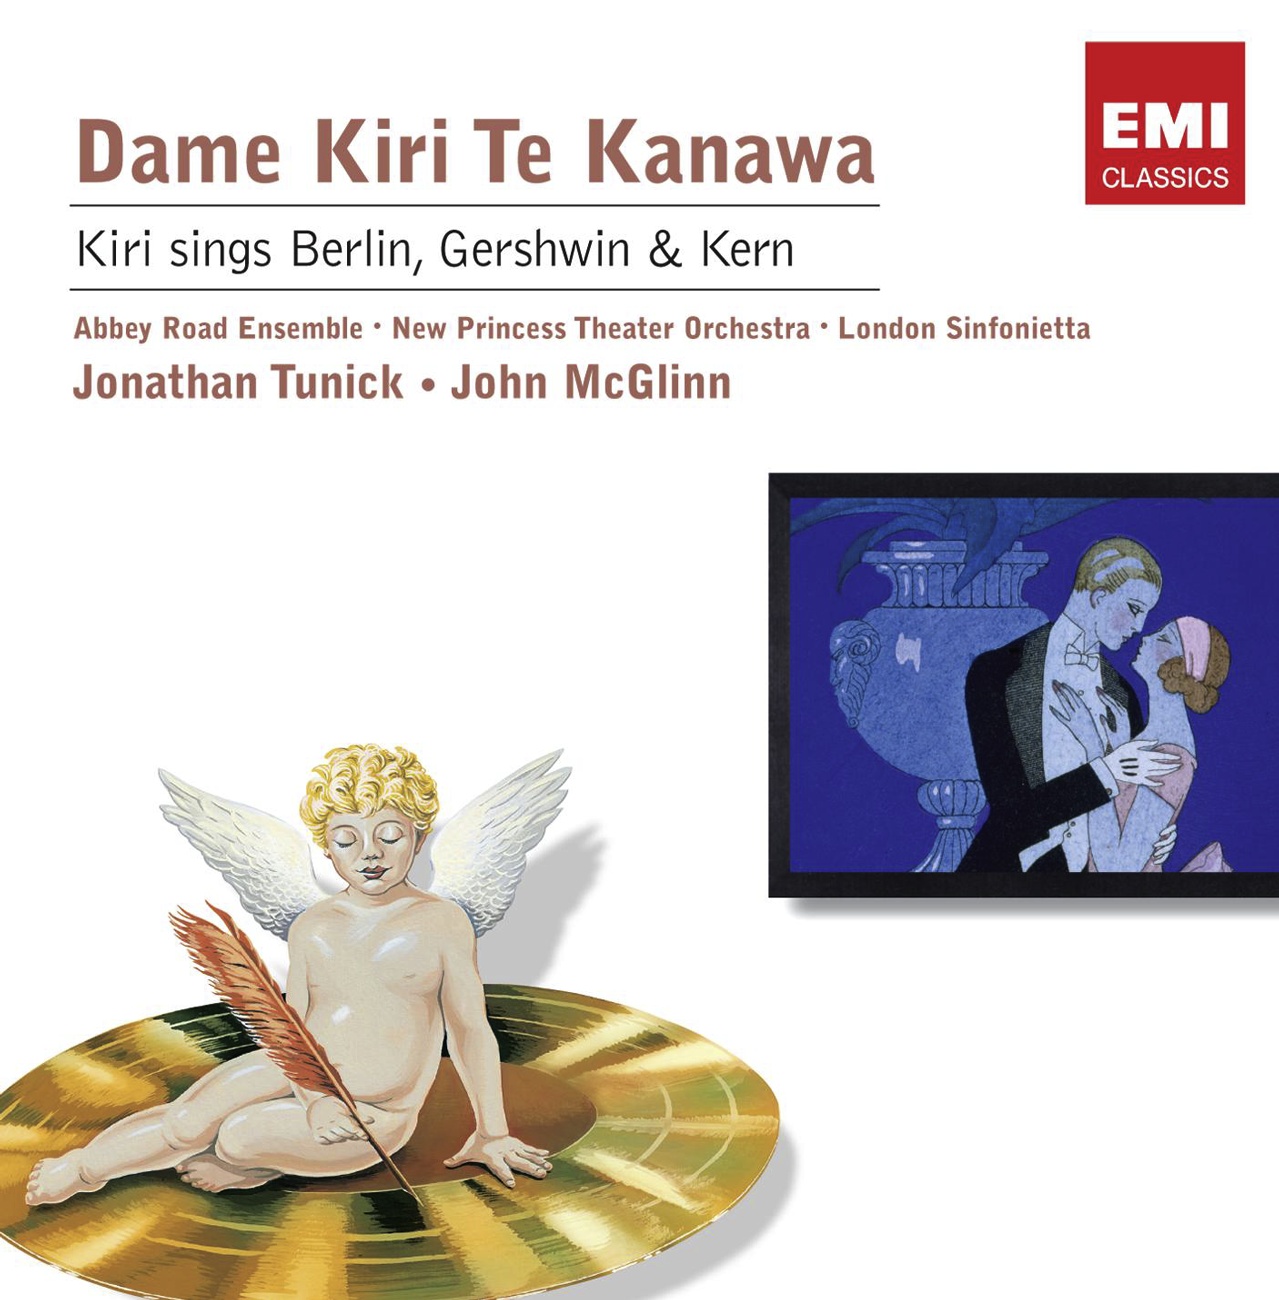 Kiri sings Berlin, Gershwin & Kern